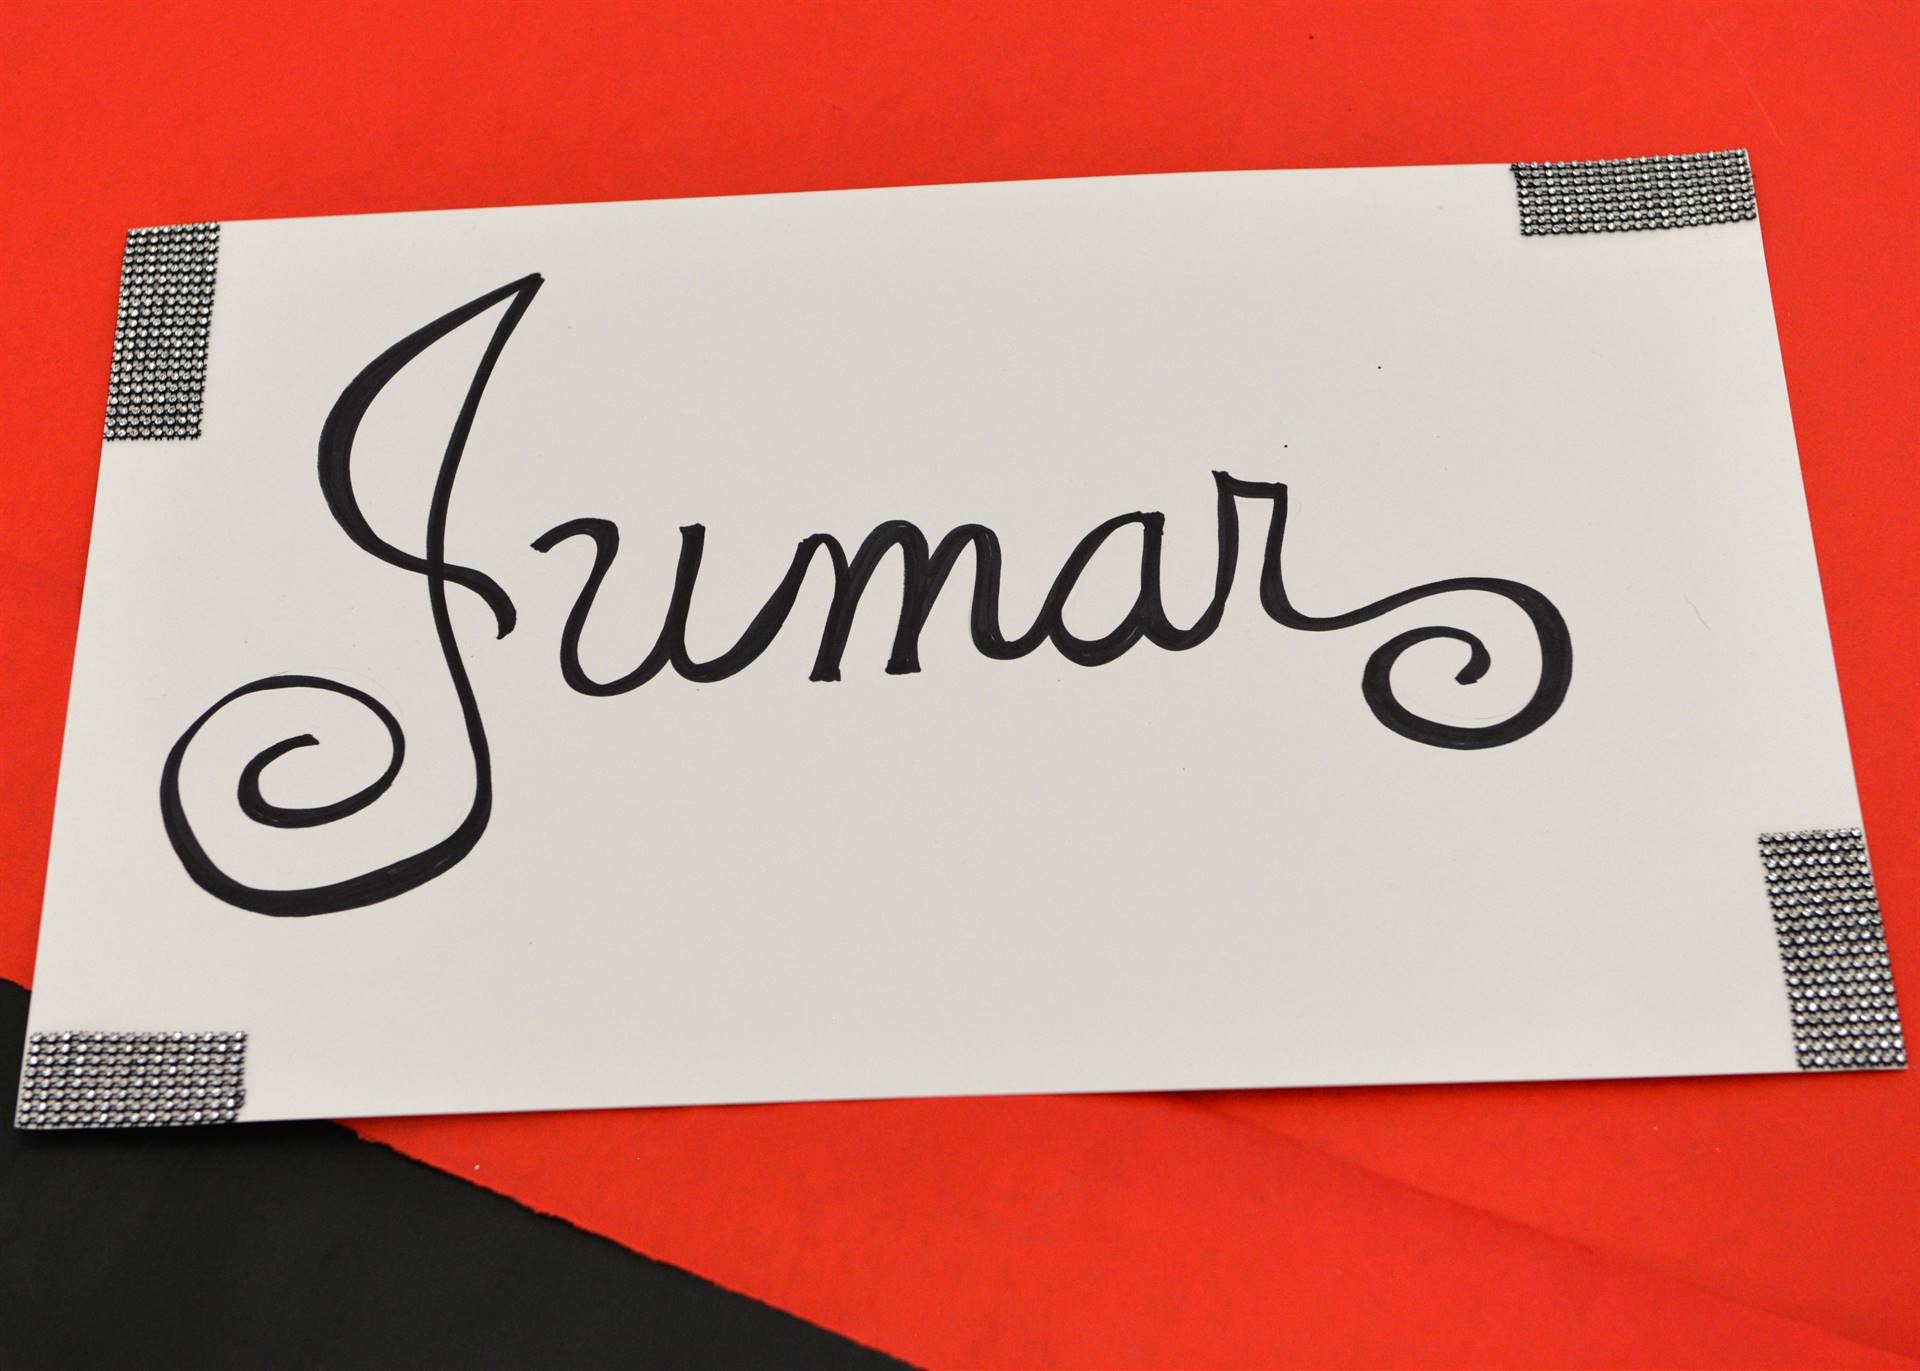 Homecoming name Jumar